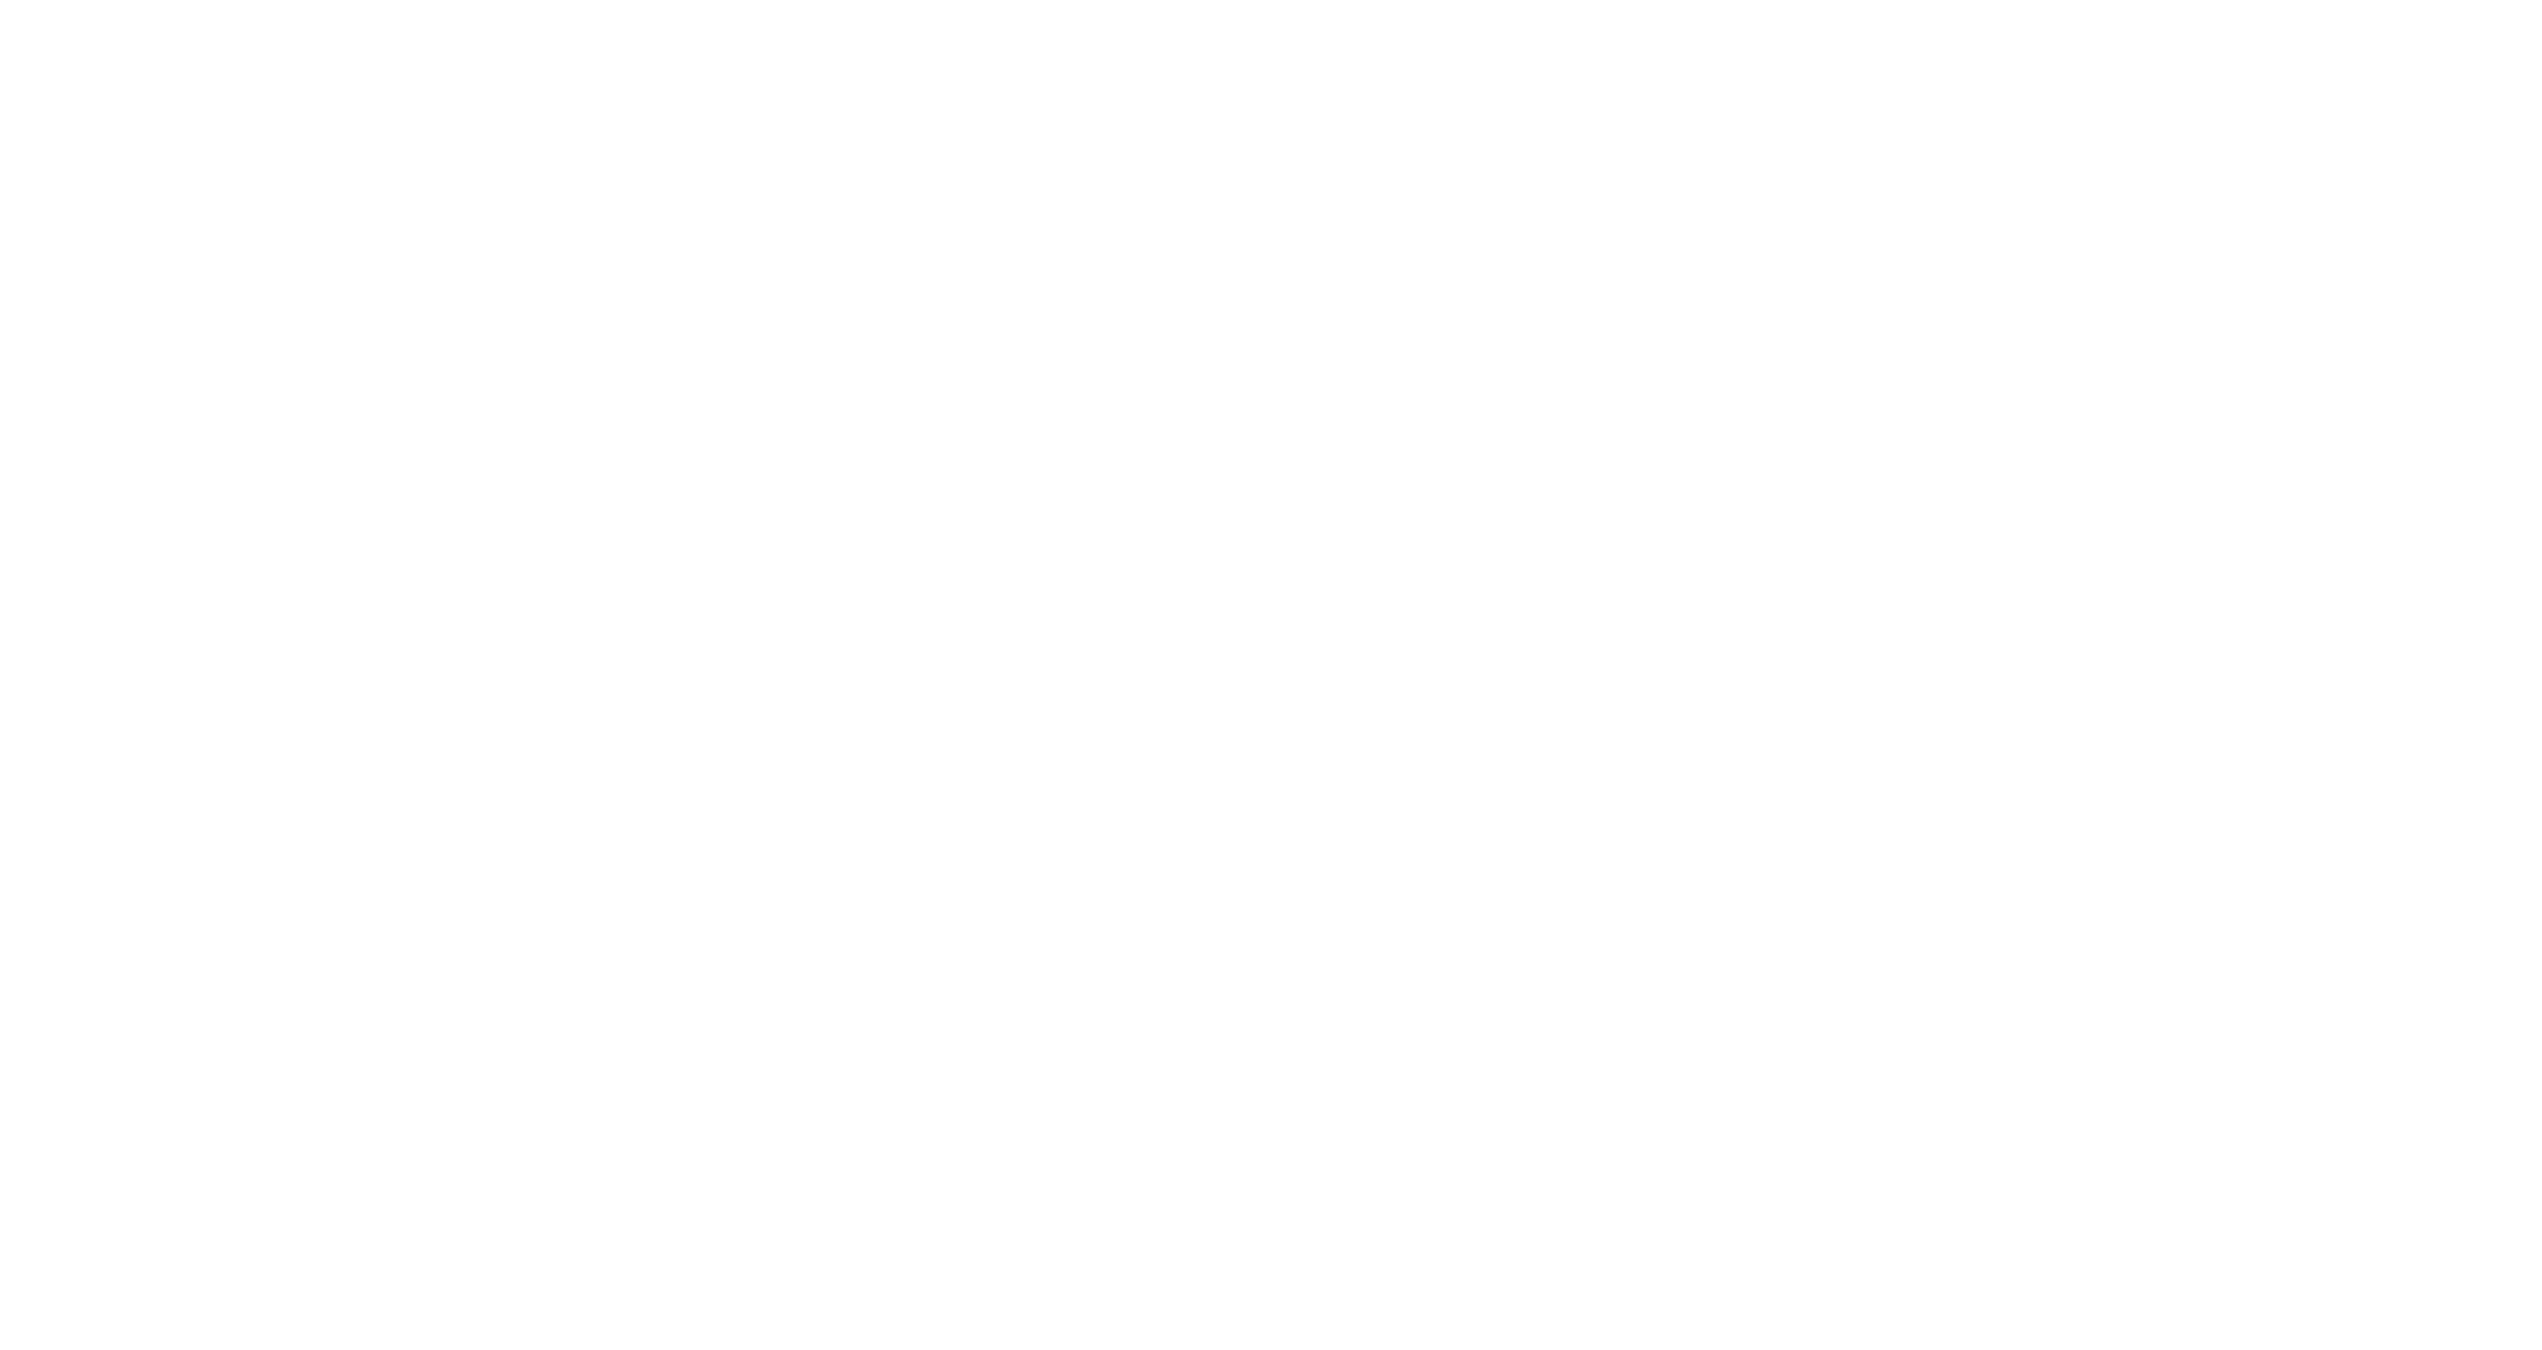 Studio Keck